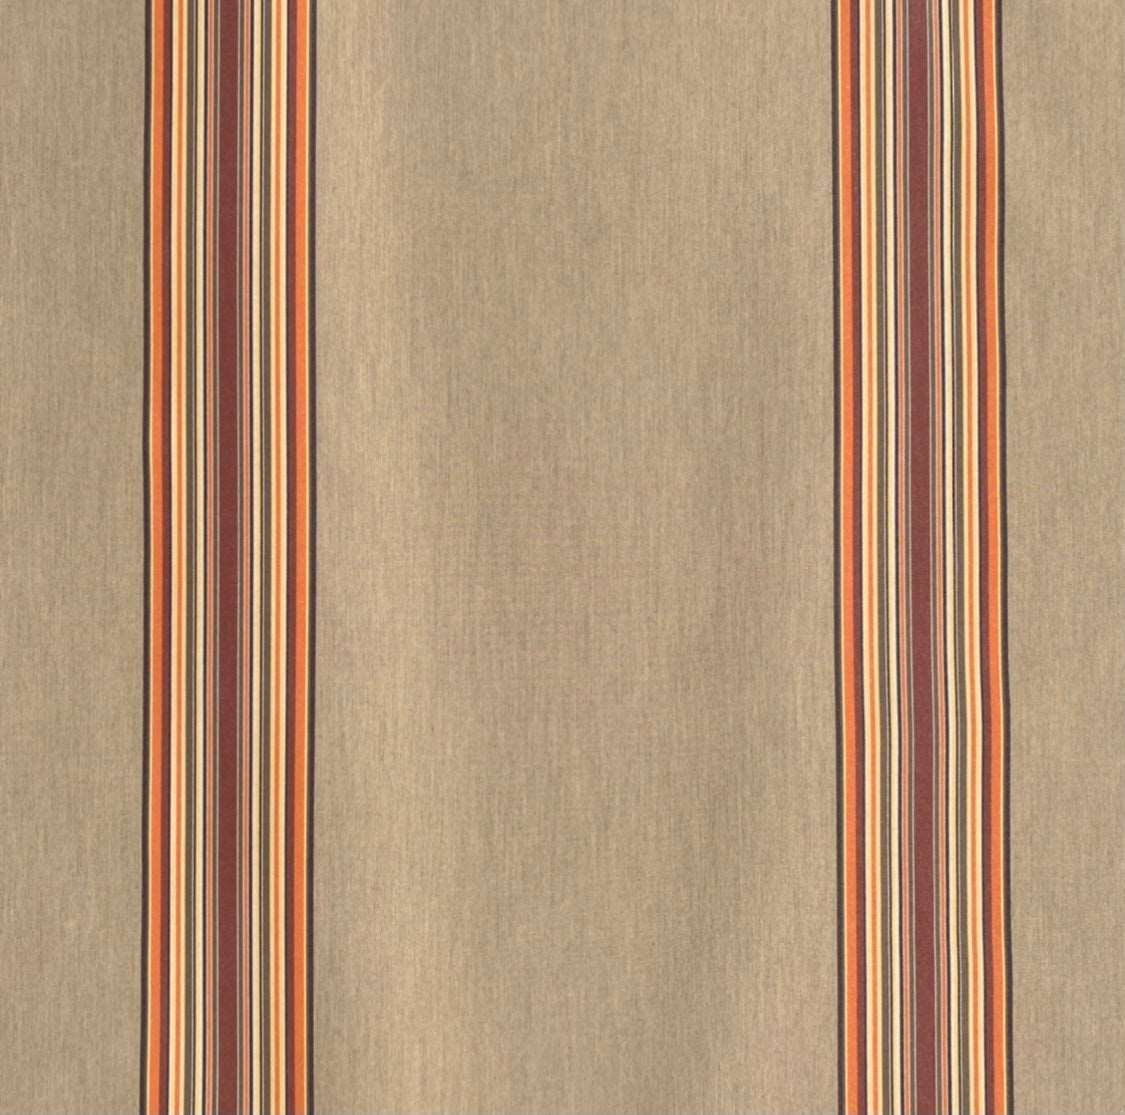 Sunbrella Acrylic Canvas: Taupe, Orange stripe